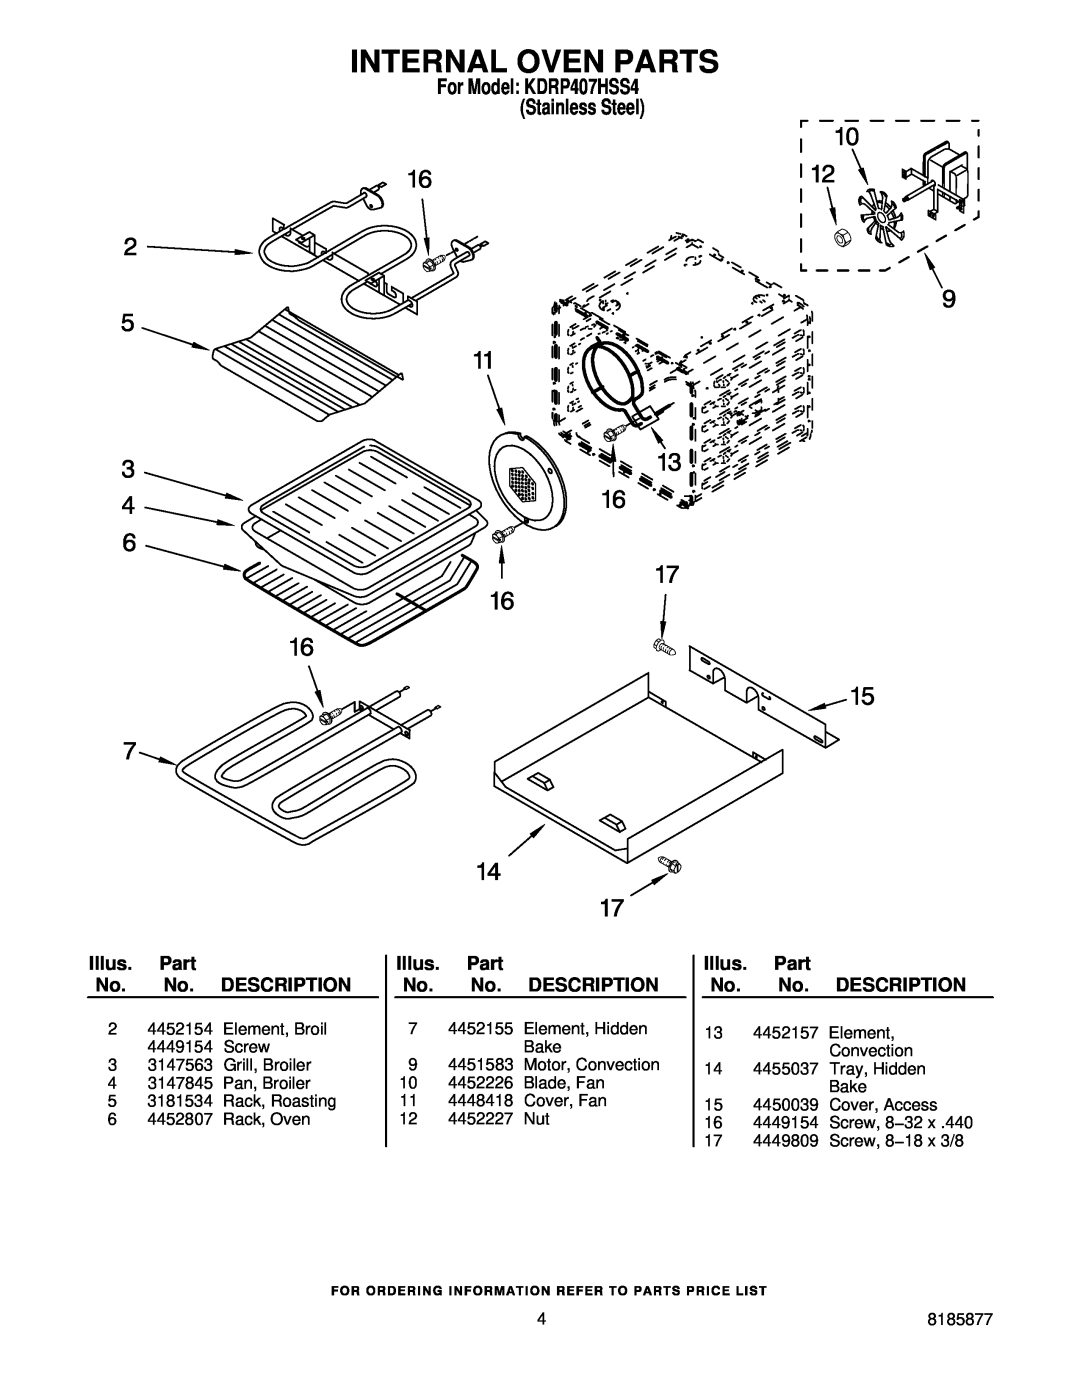 KitchenAid manual Internal Oven Parts, For Model KDRP407HSS4 Stainless Steel, Illus. Part No. No. DESCRIPTION 